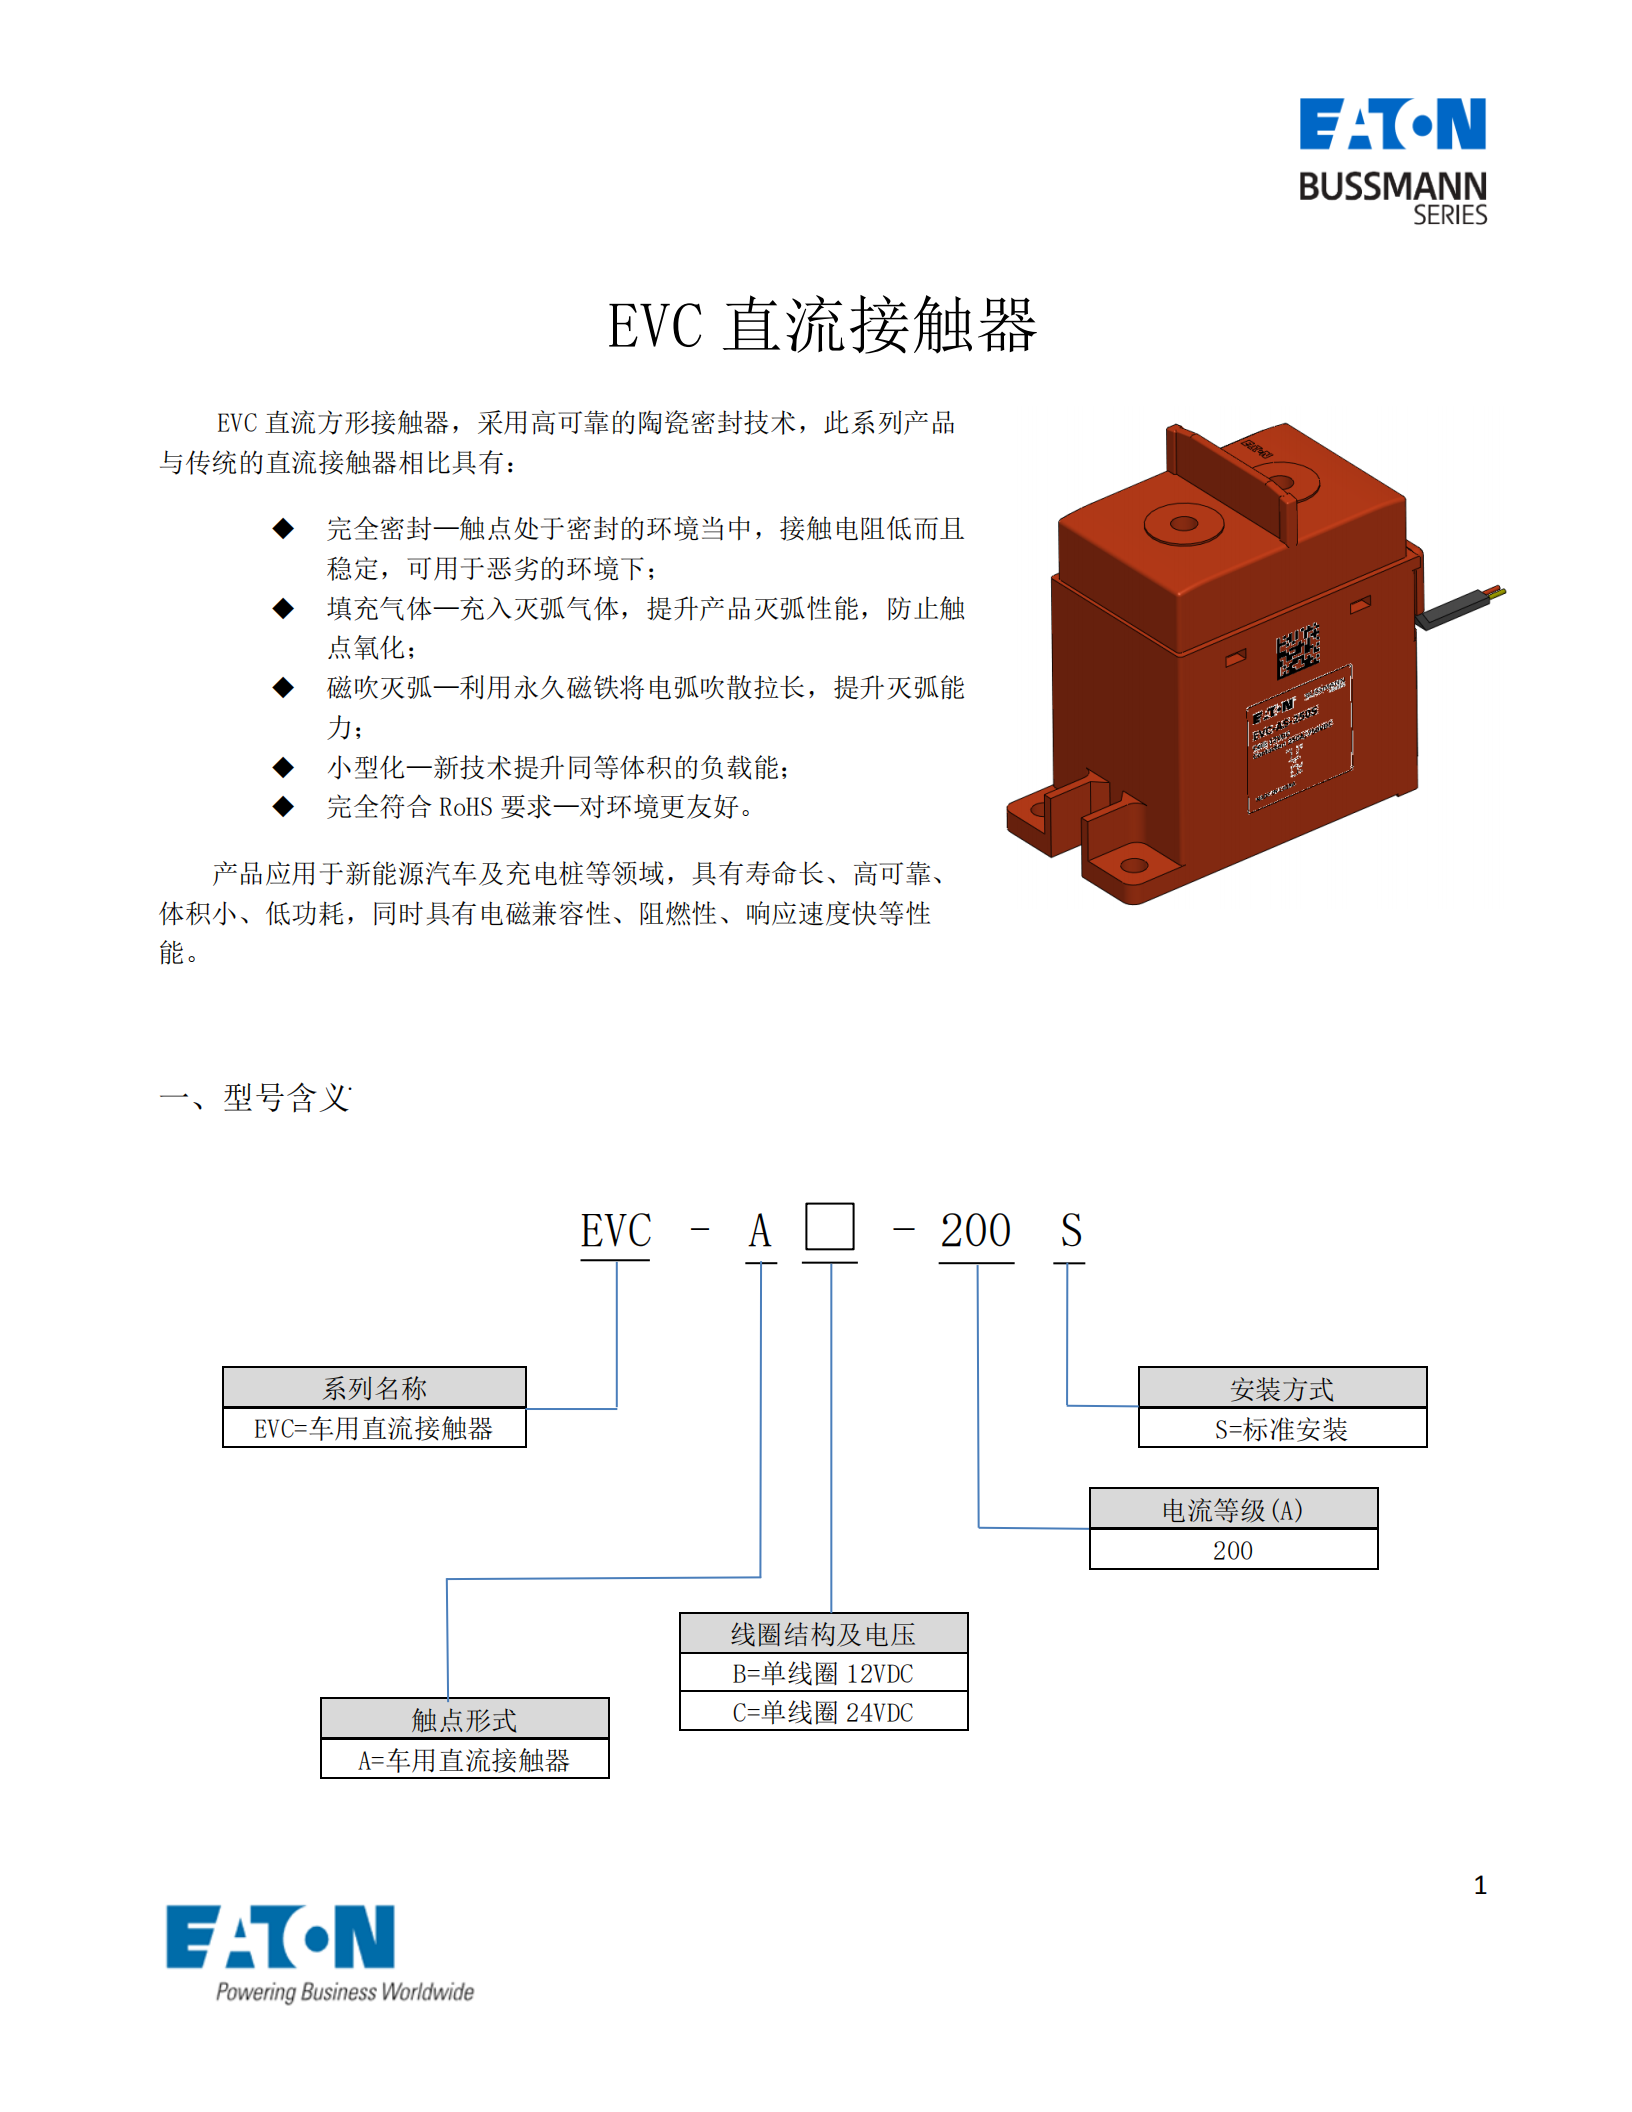 EVC-AB-200S直流接触器